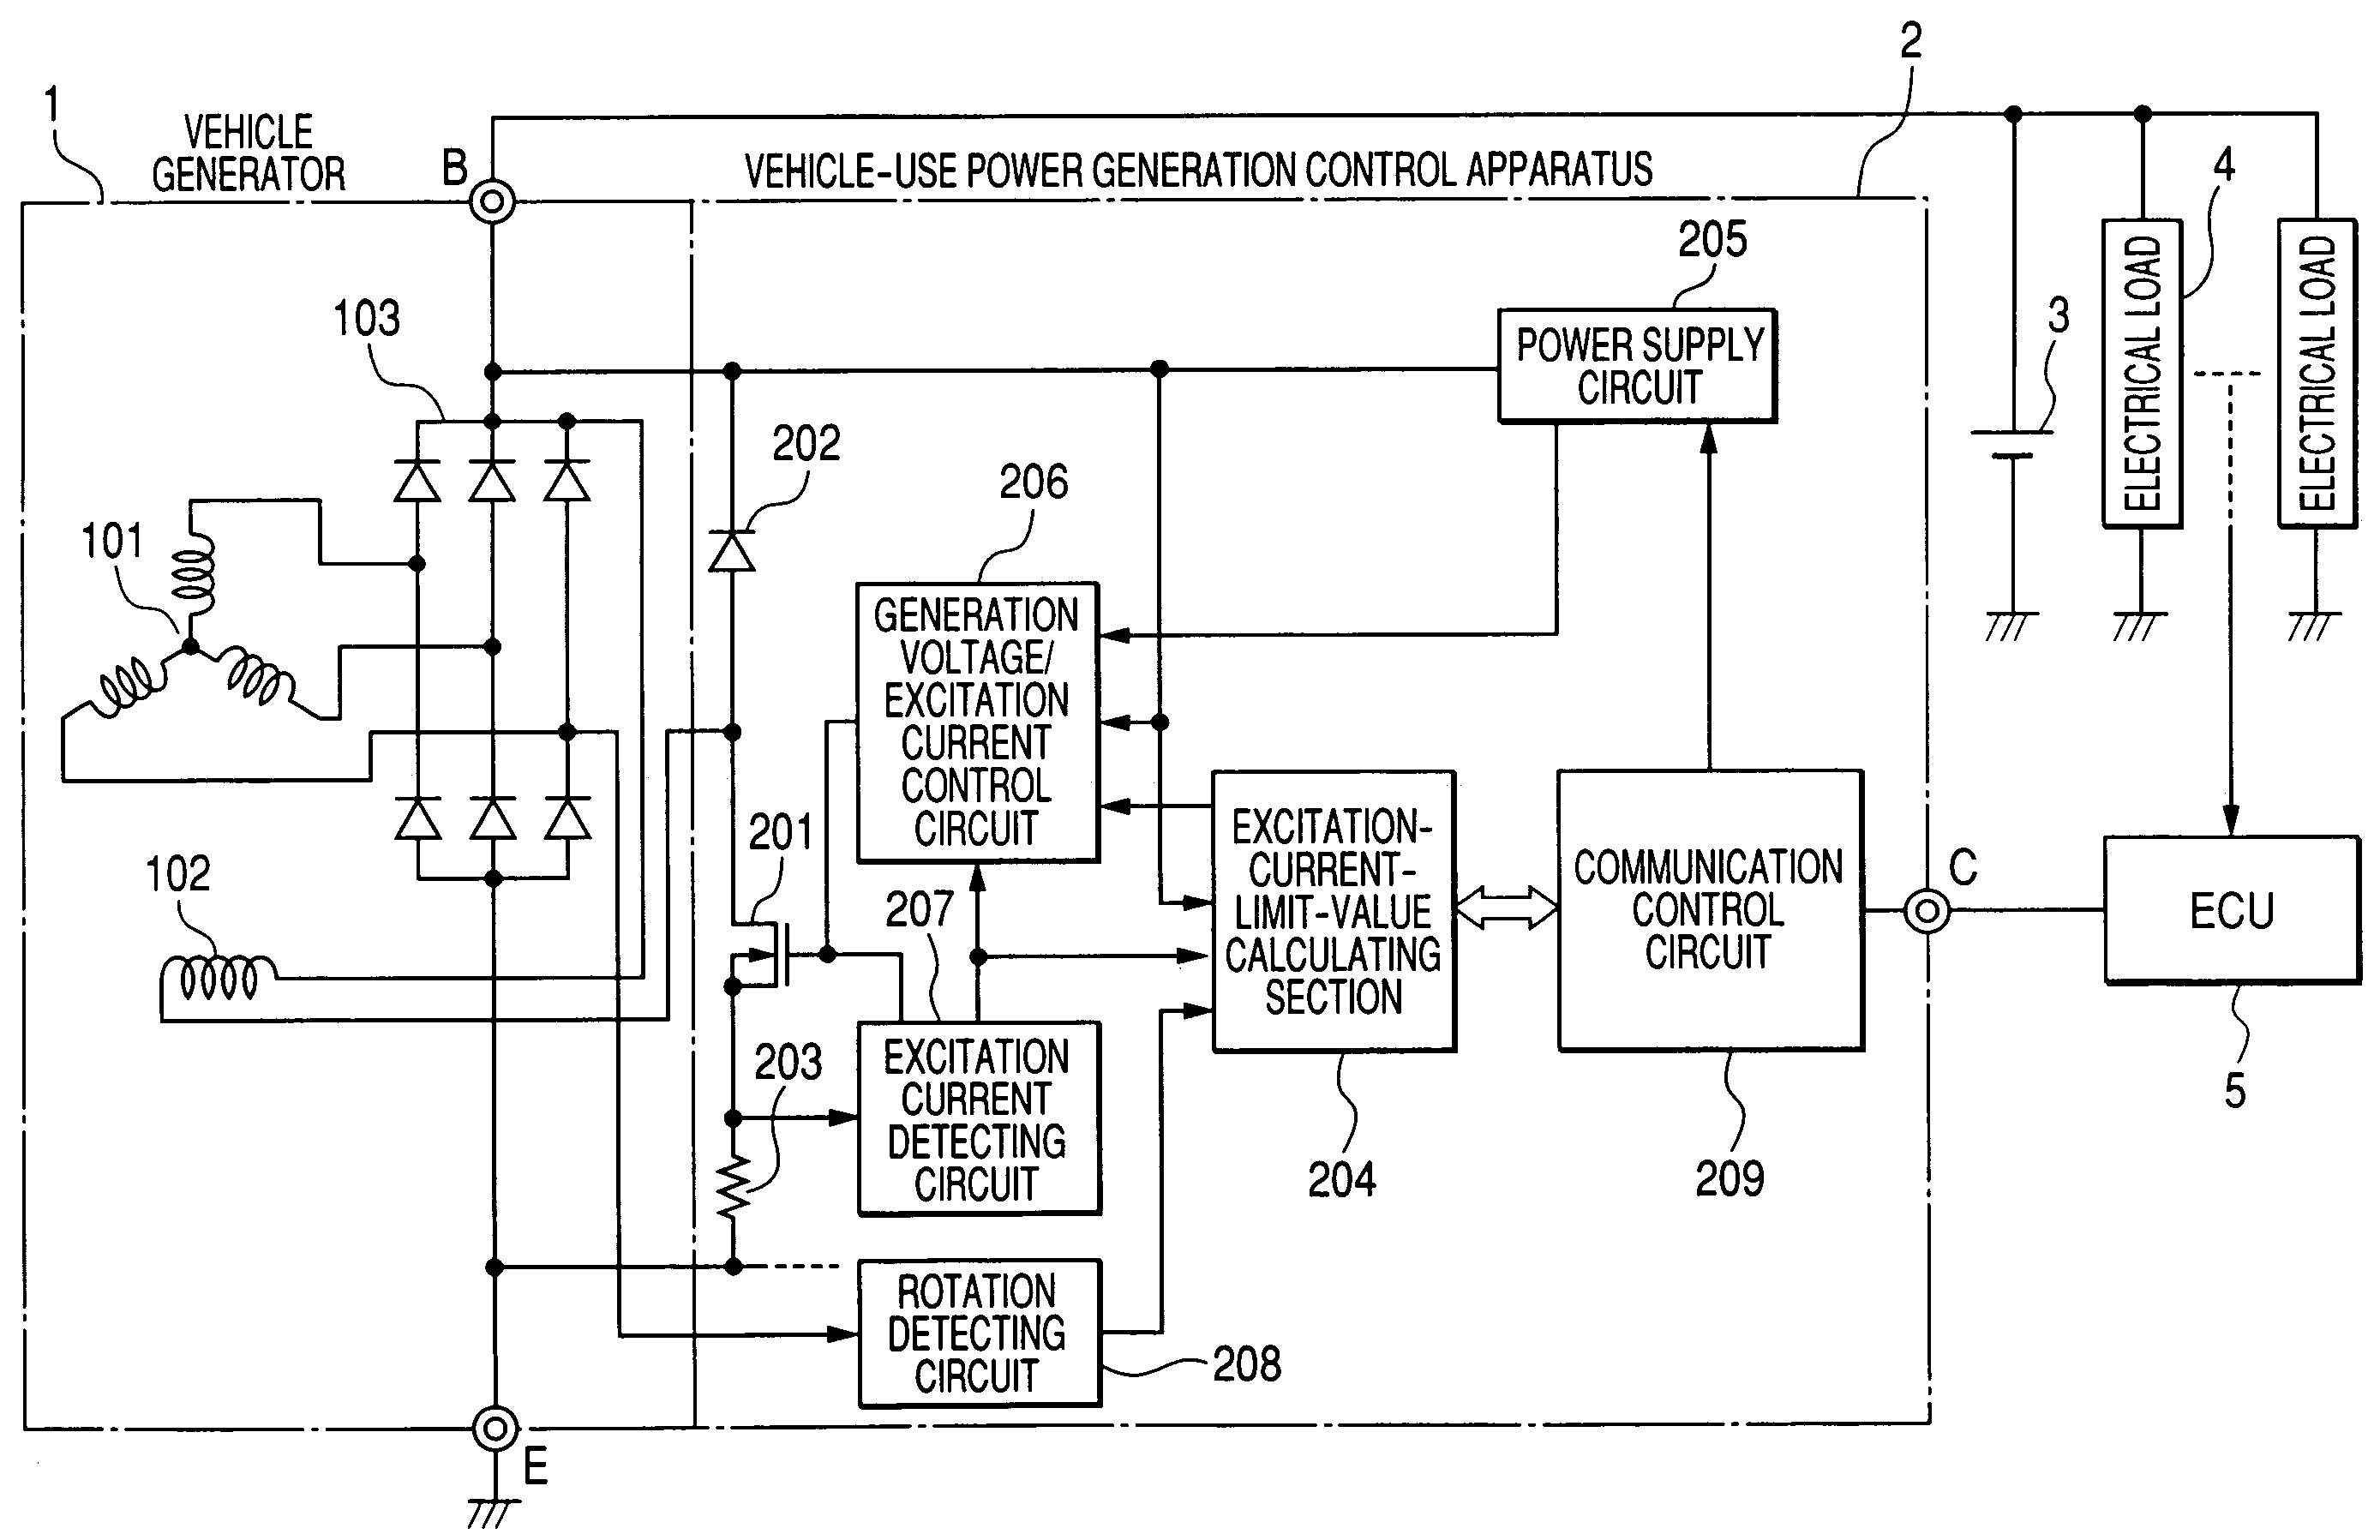 Vehicle-use power generation control apparatus